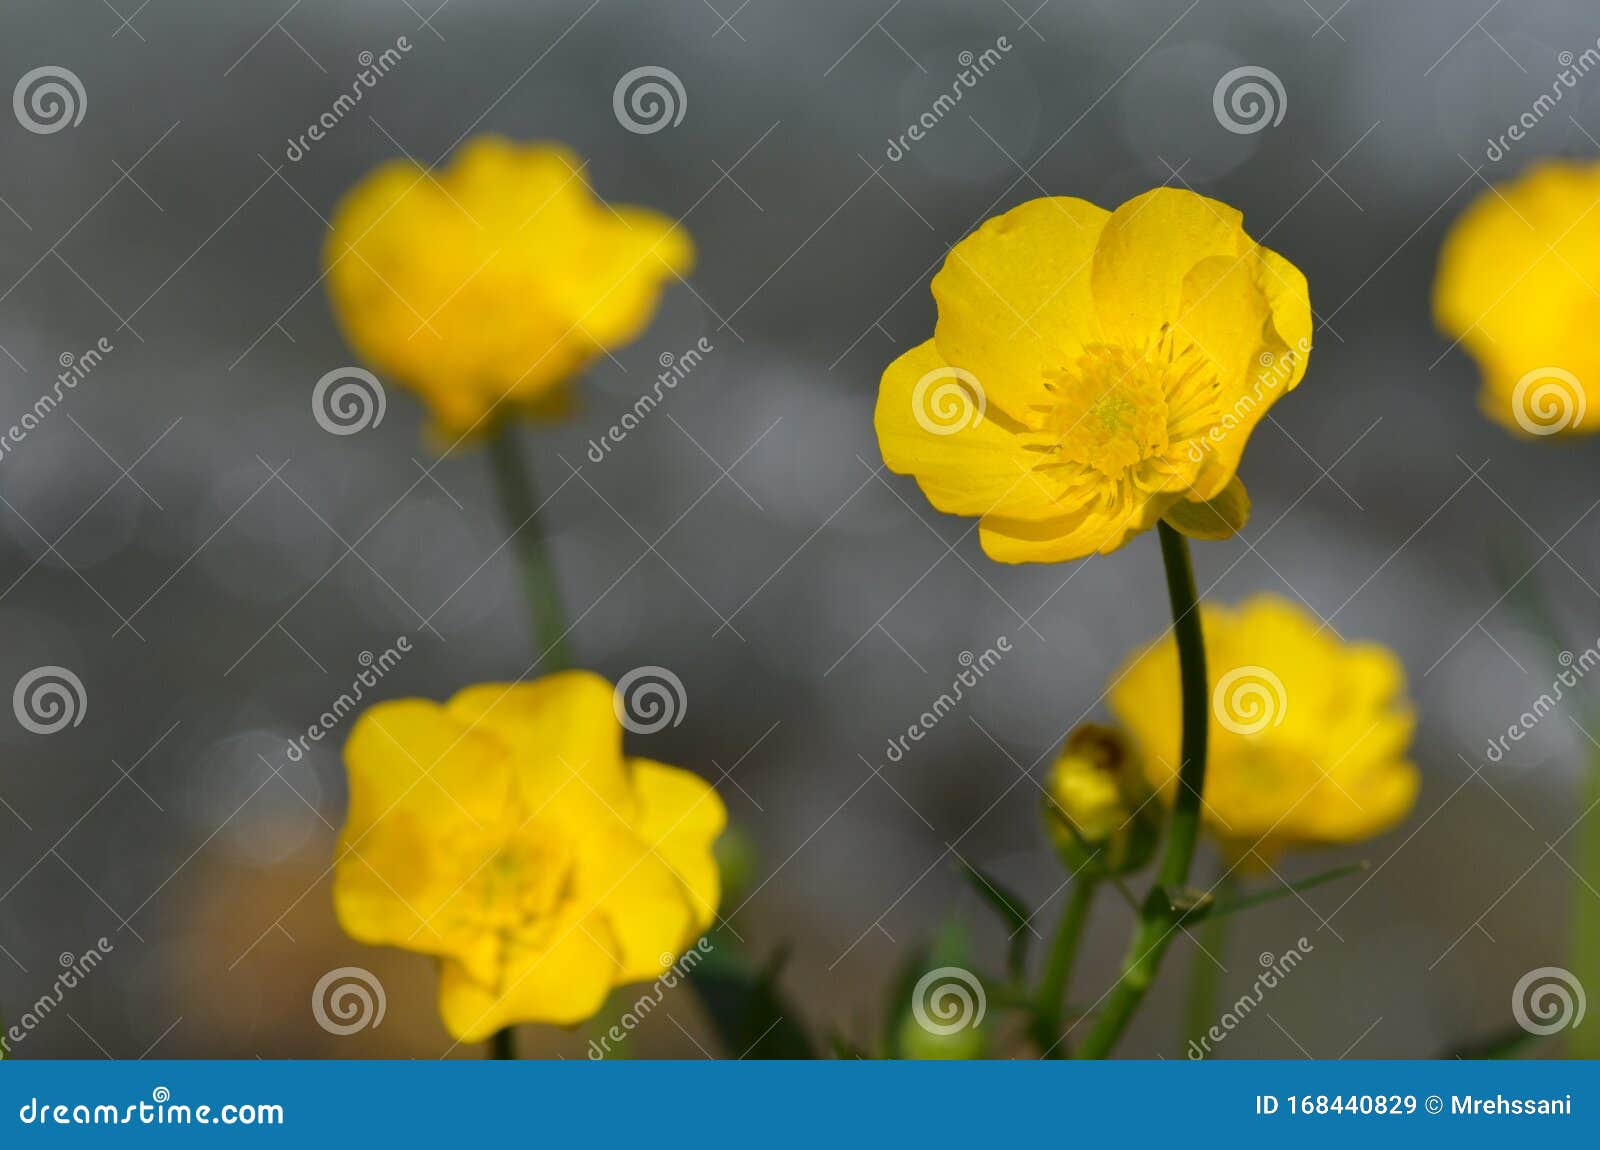 ranunculus repens flower close up